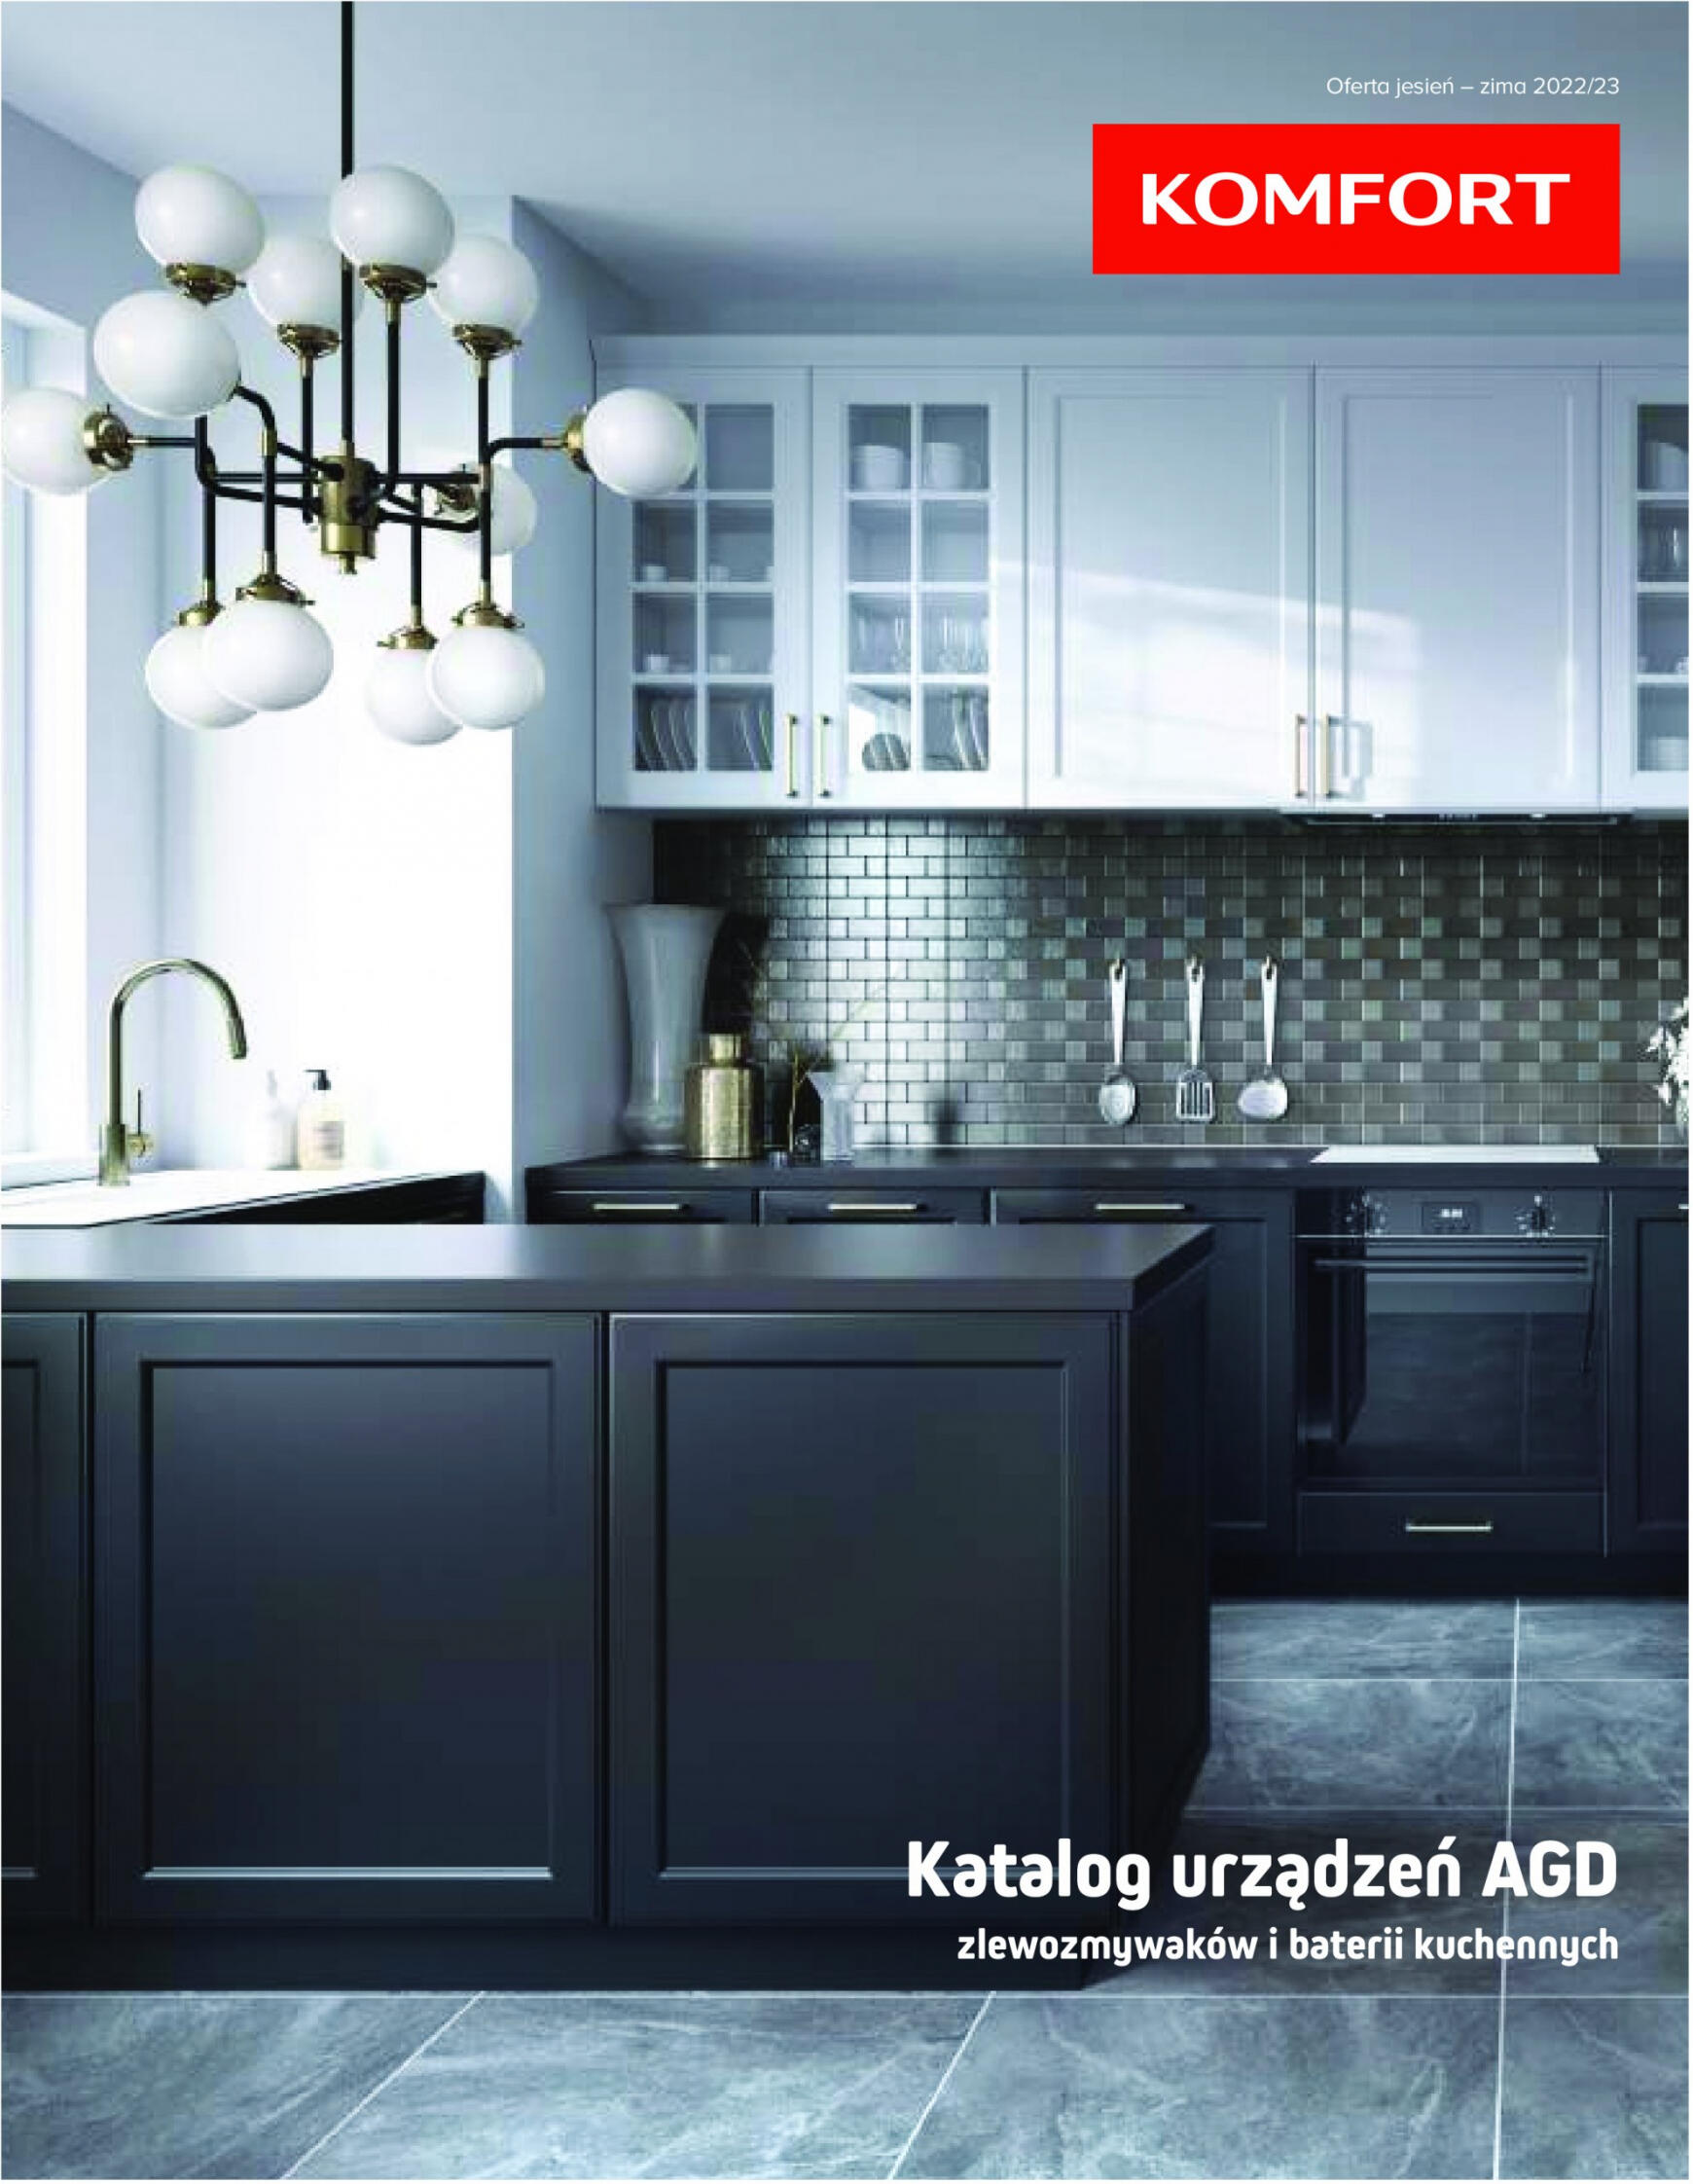 komfort - Komfort Katalog AGD - page: 1